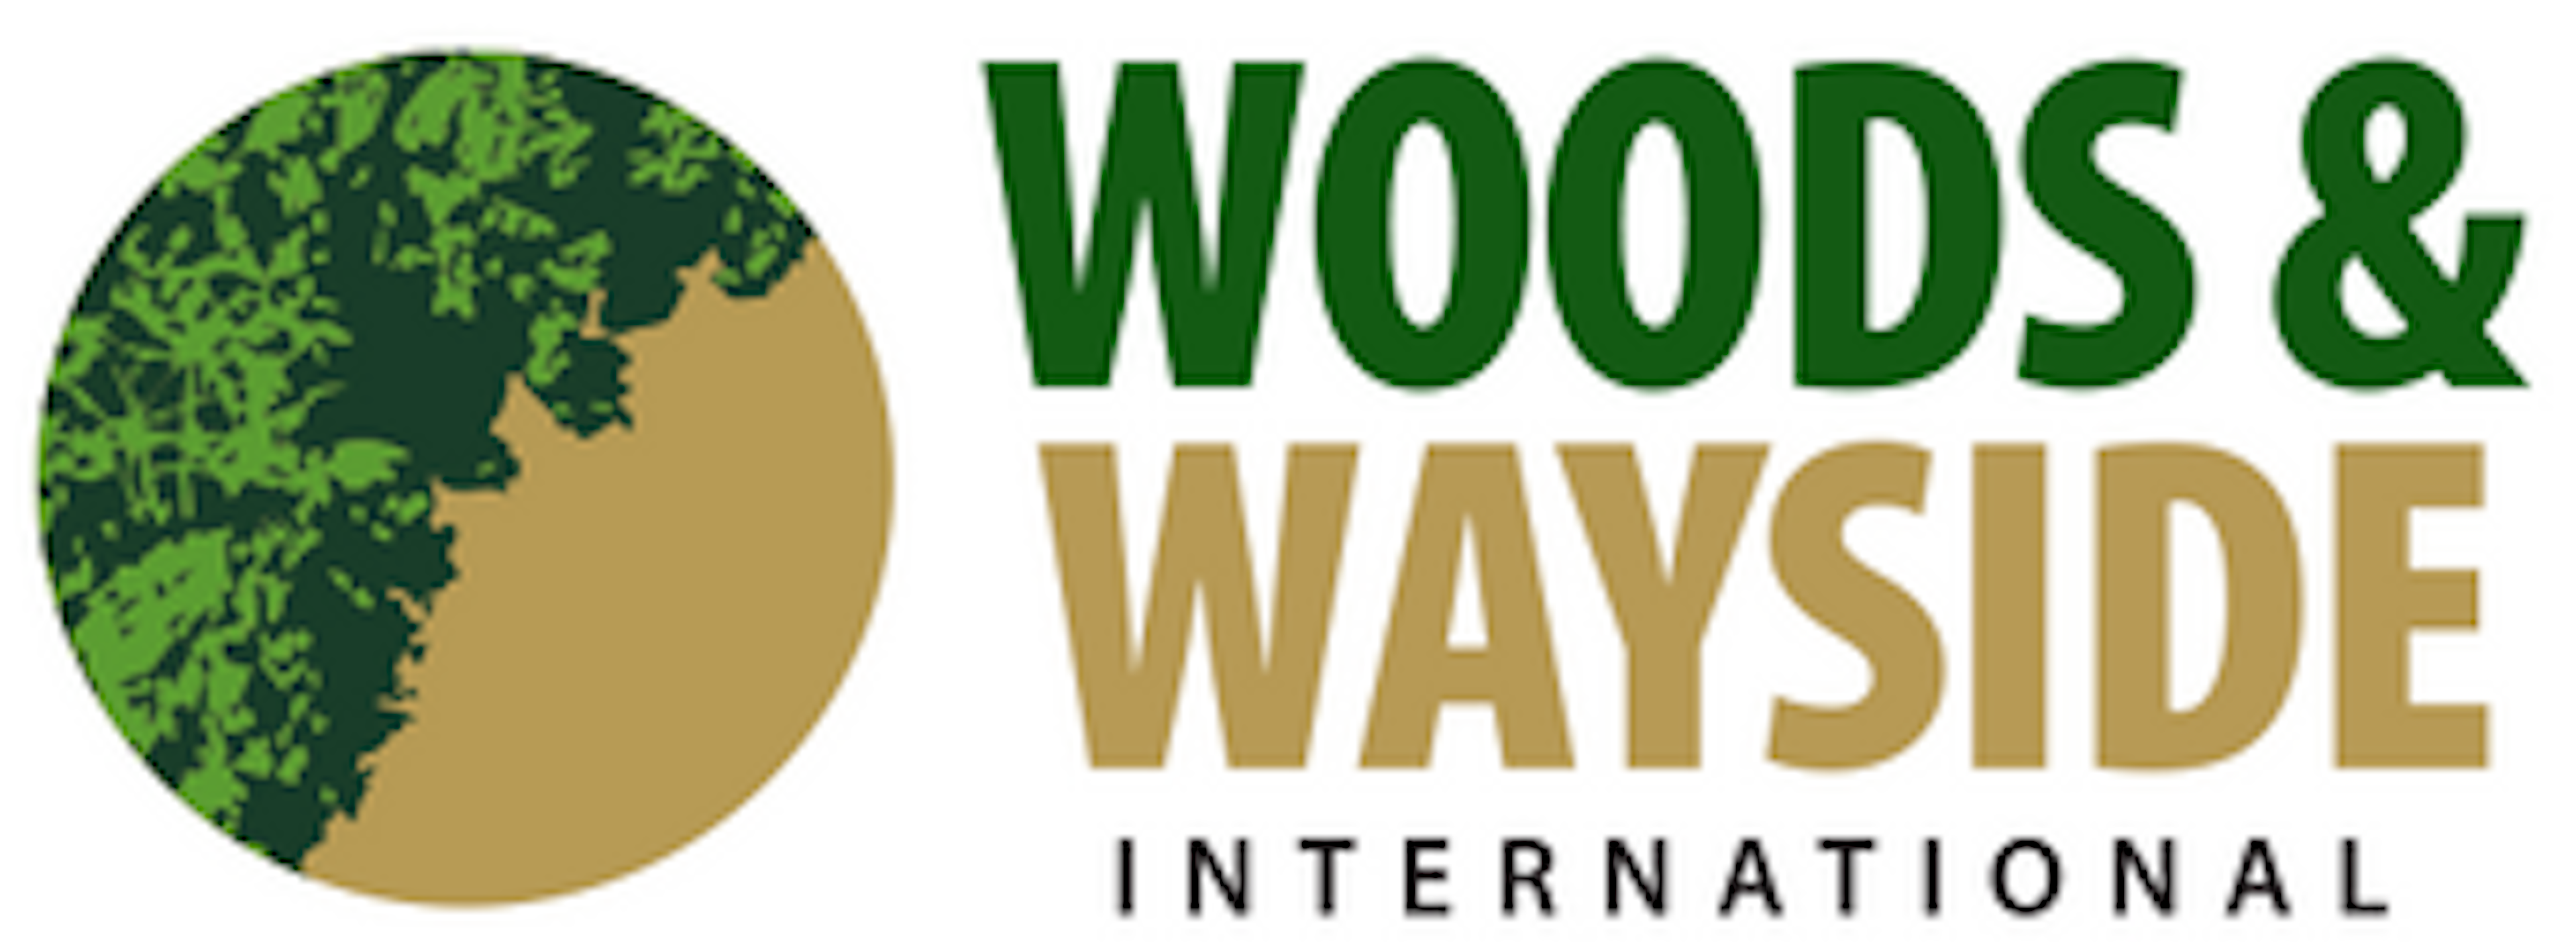 Woods & Wayside International photo